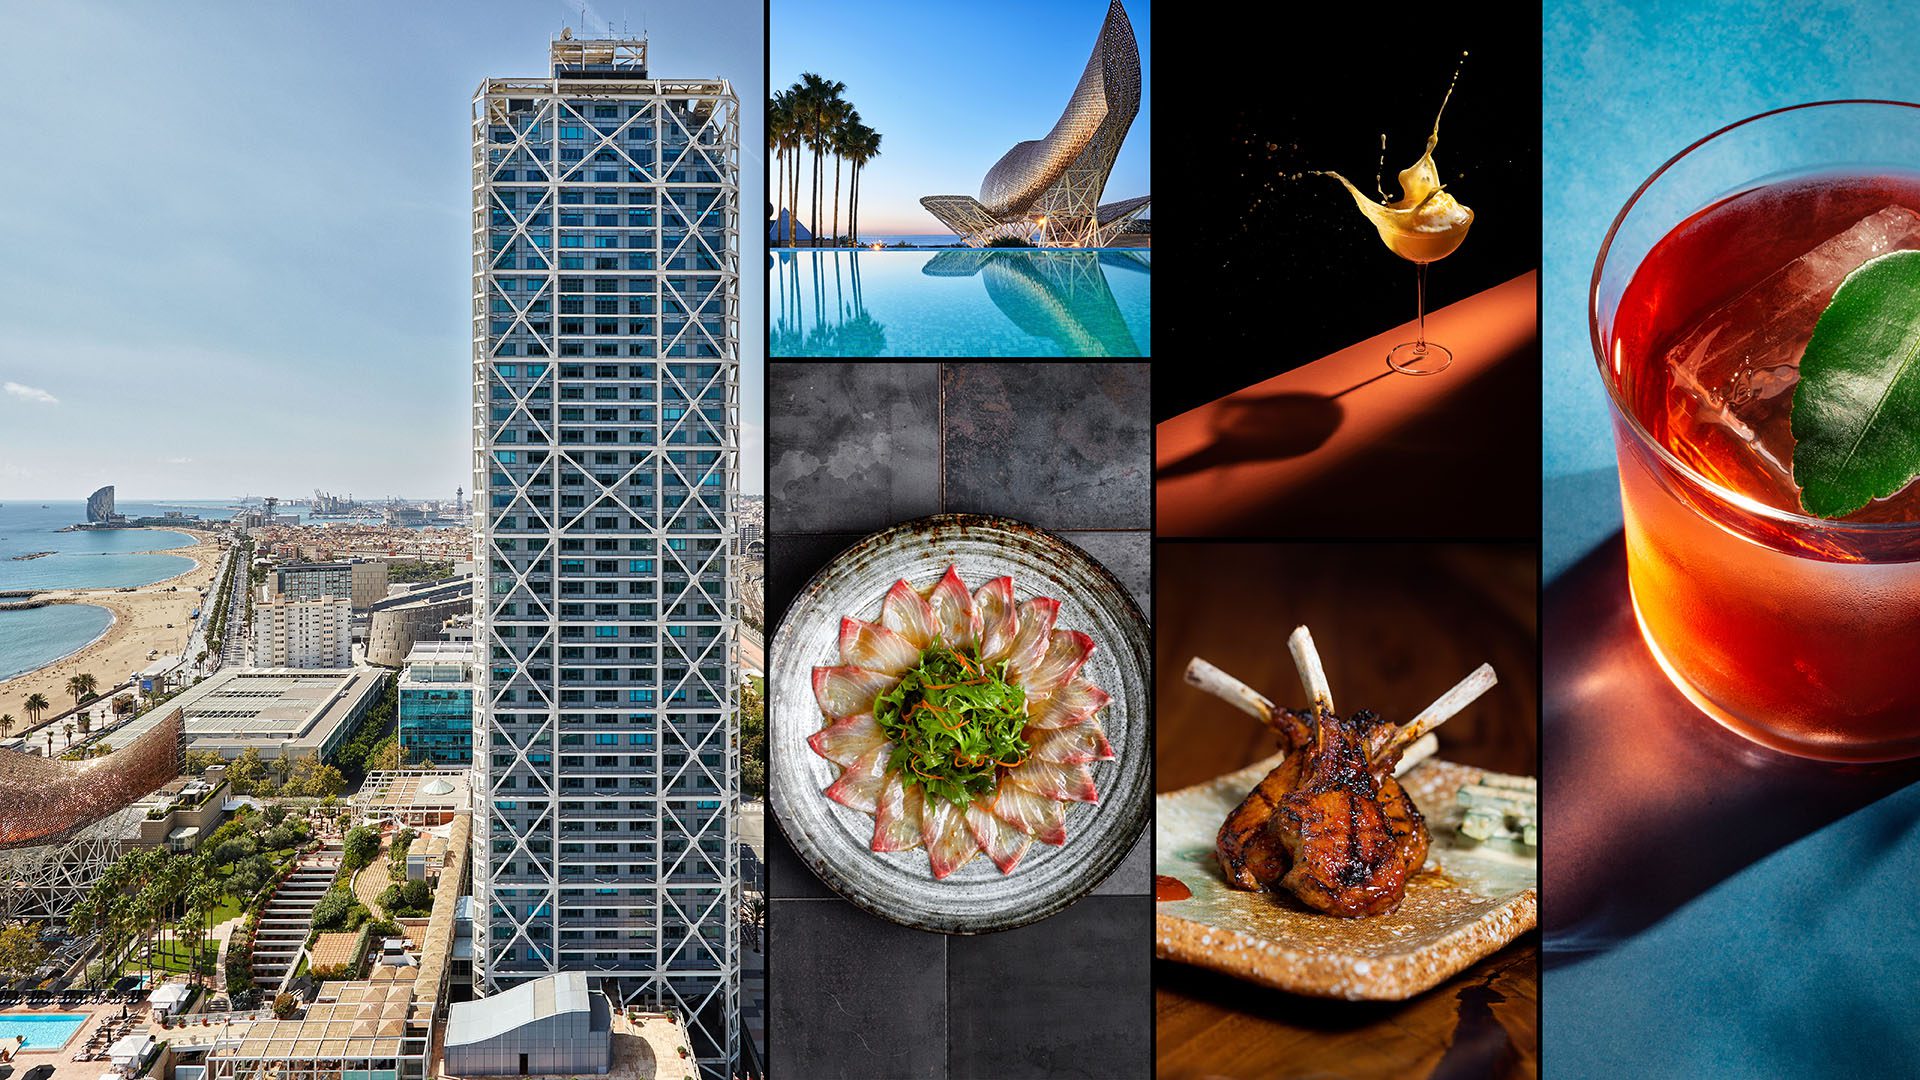 Discover ROKA’s Award-Winning Japanese Cuisine at Hotel Arts Barcelona